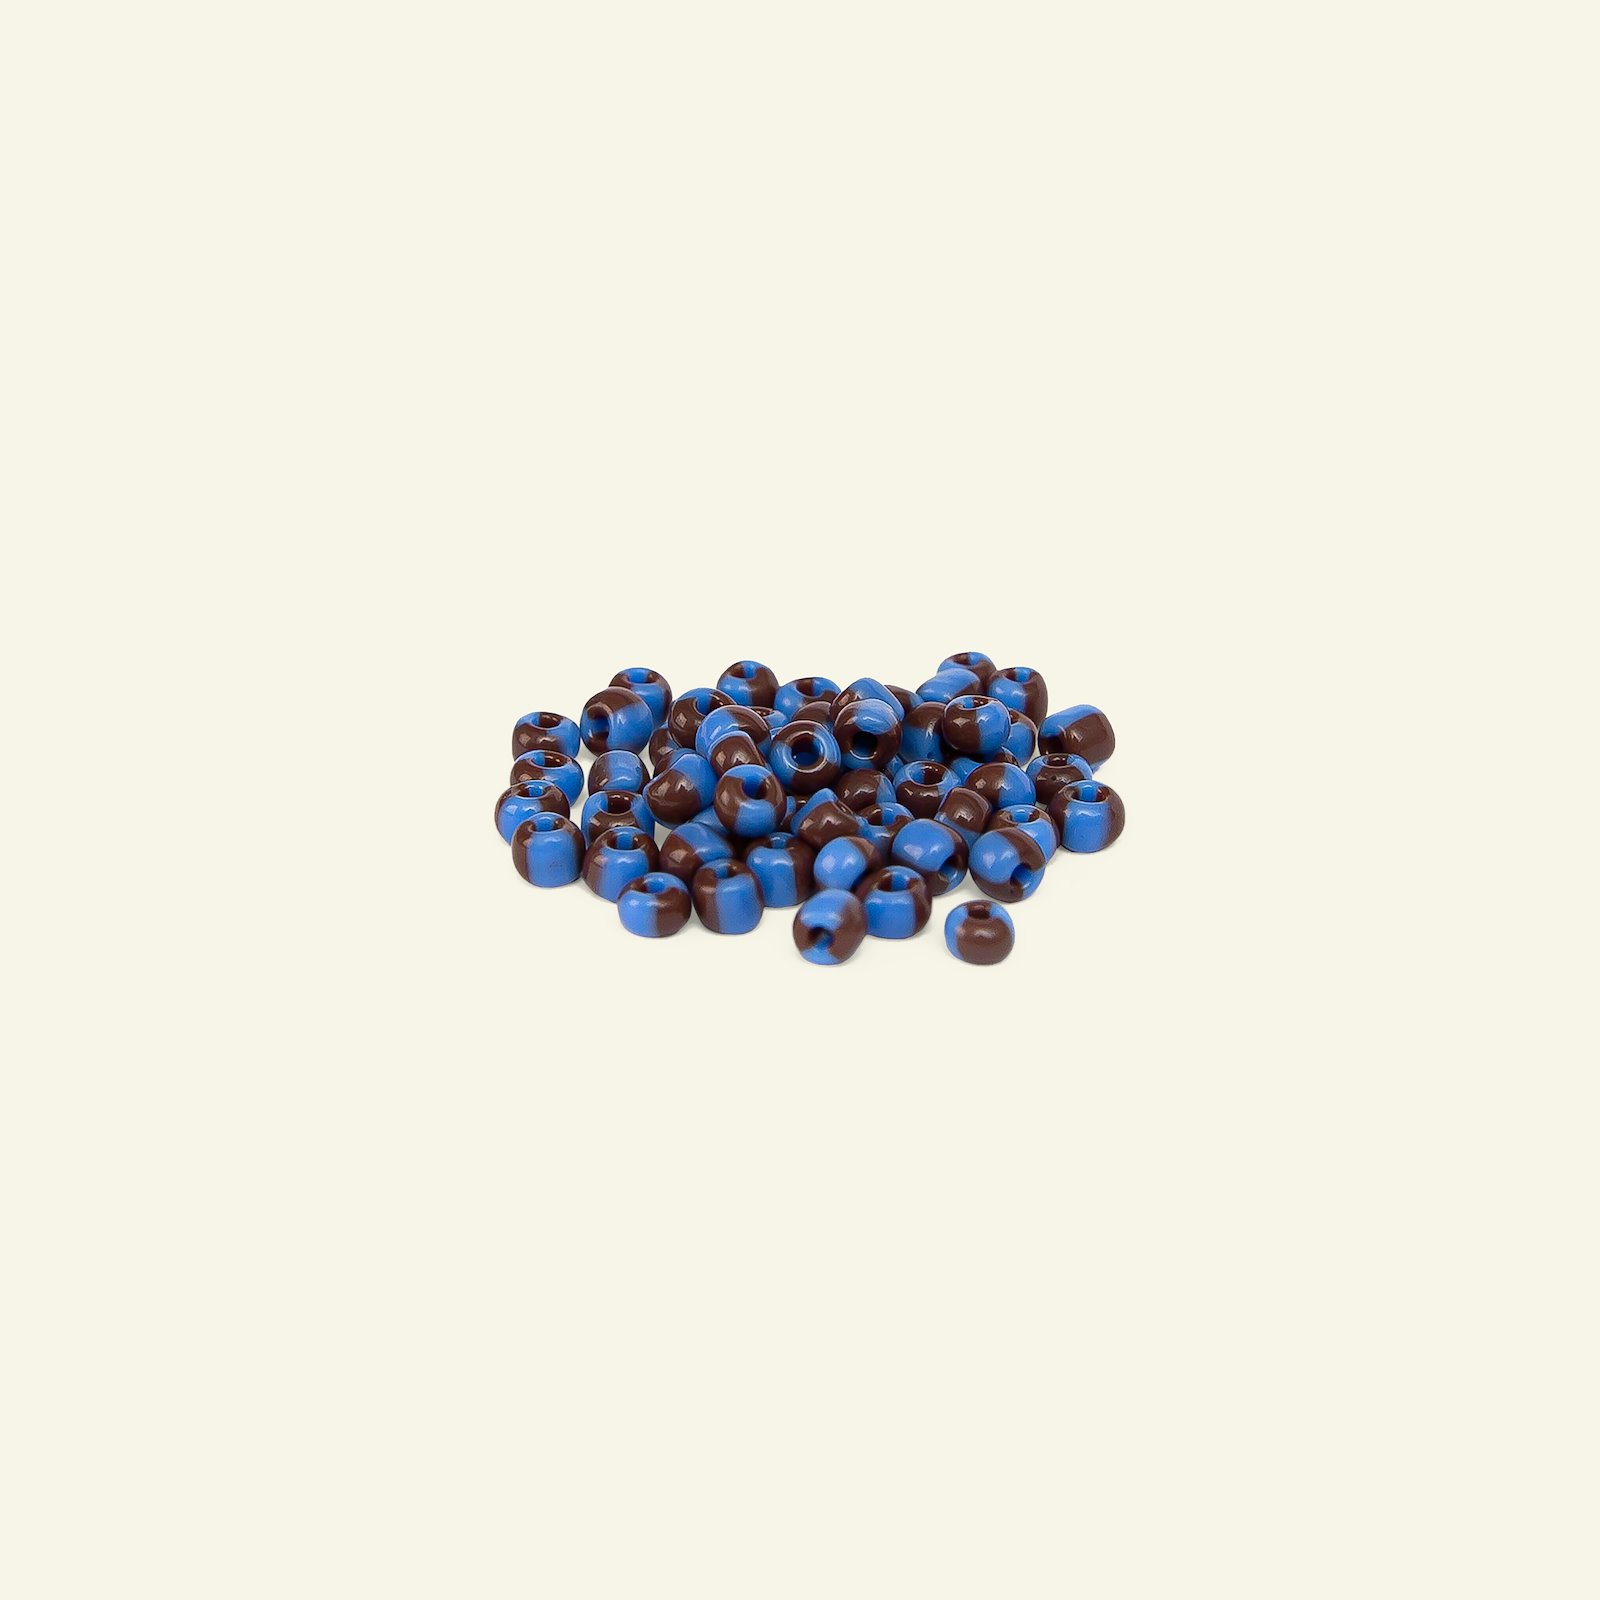 Matsuno glass bead 8/0 blue/brown 10g 47128_pack_b